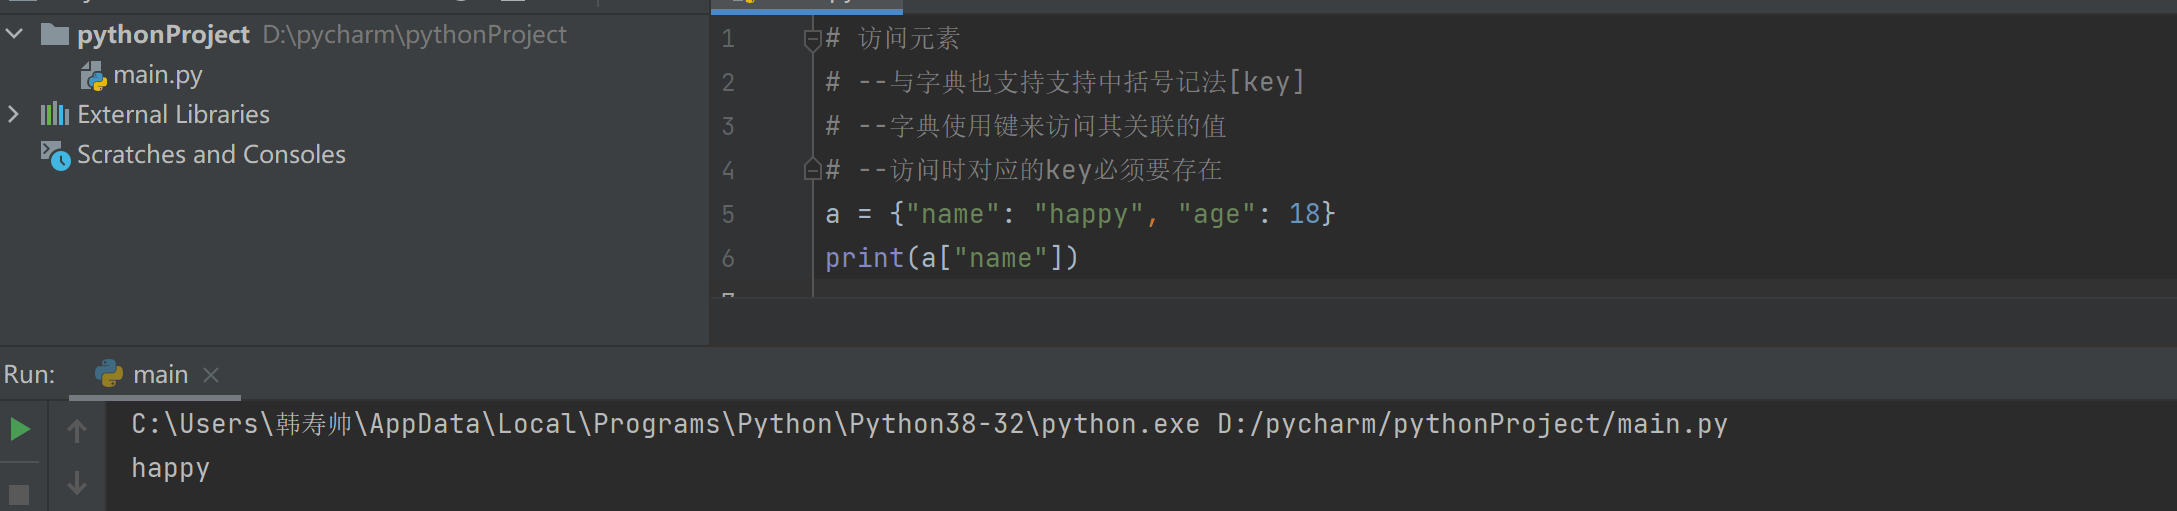 python常用数据结构字典梳理